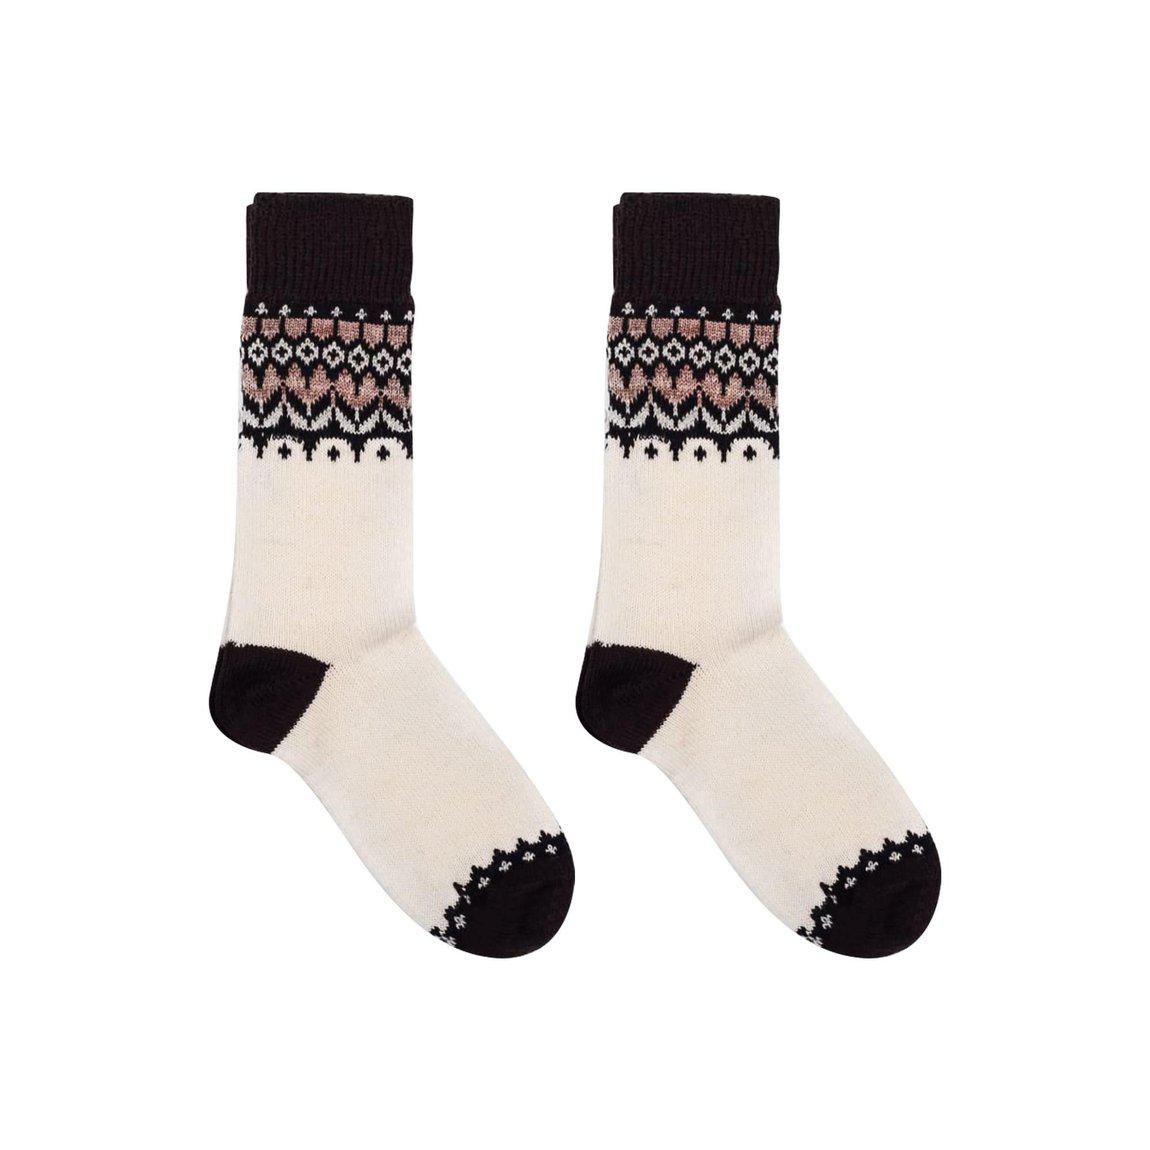 Nordic Wools Merino Jorunn Socks - Creme - Unisex scandinavian 